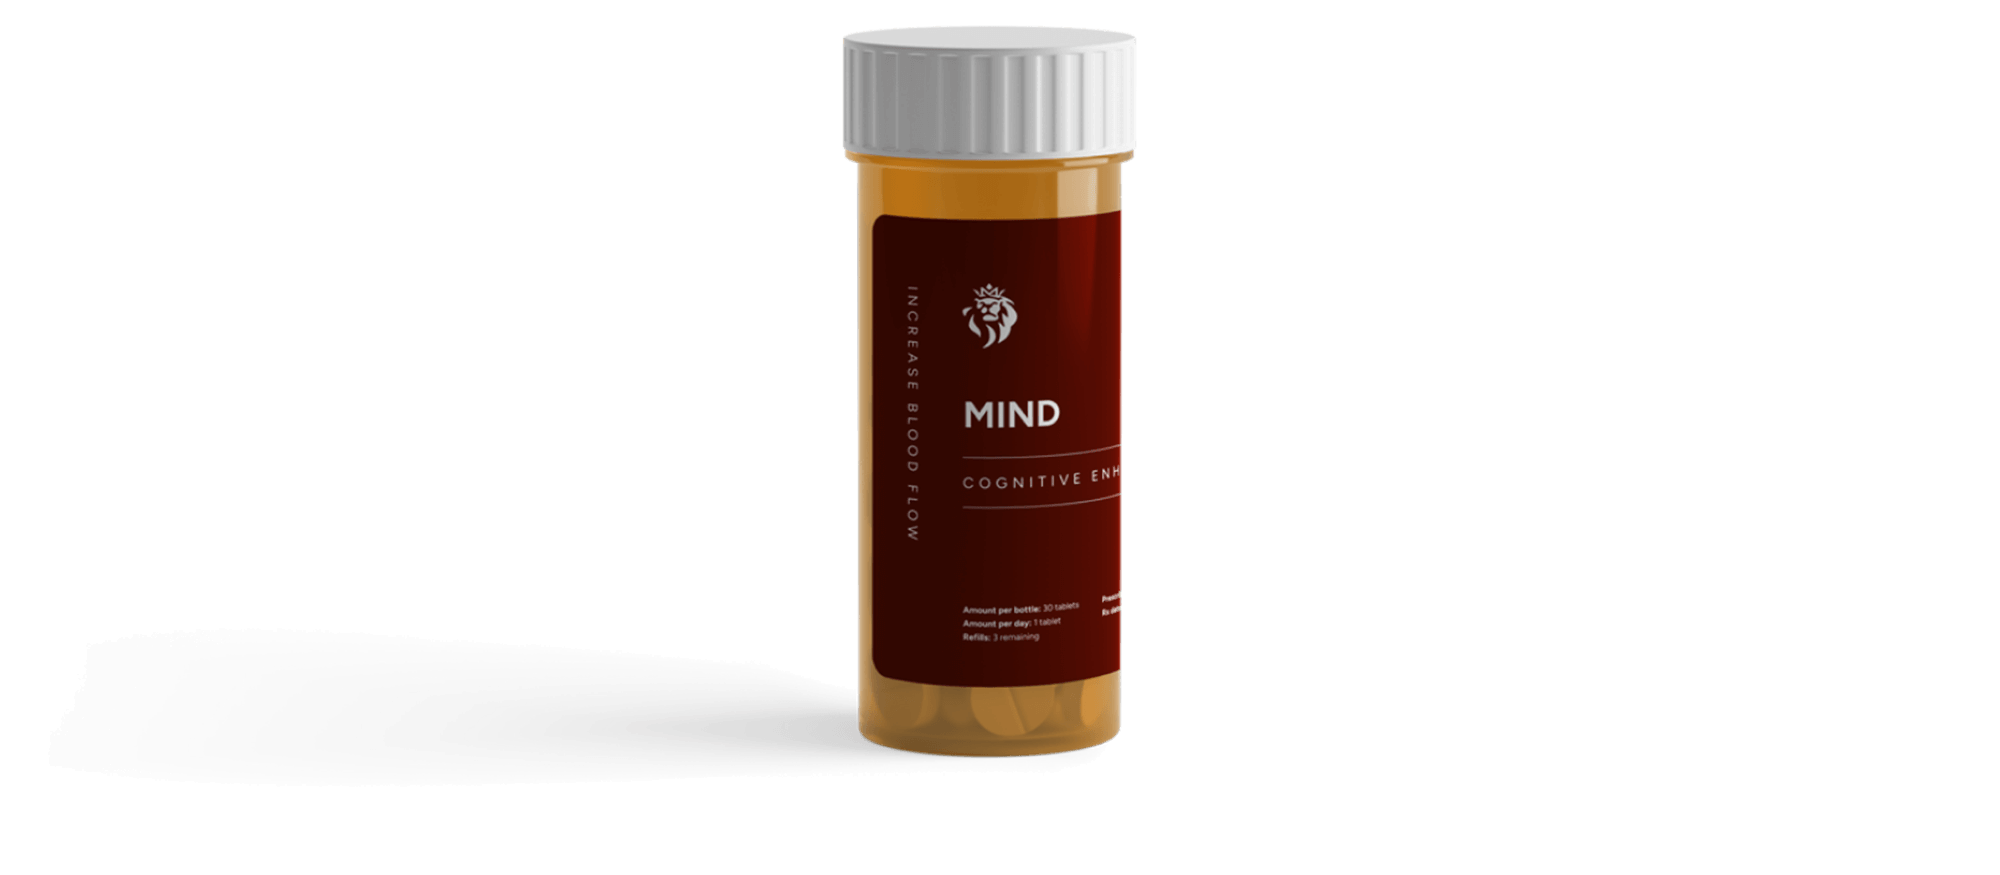 Bottle with Cognitive Enhancement pills